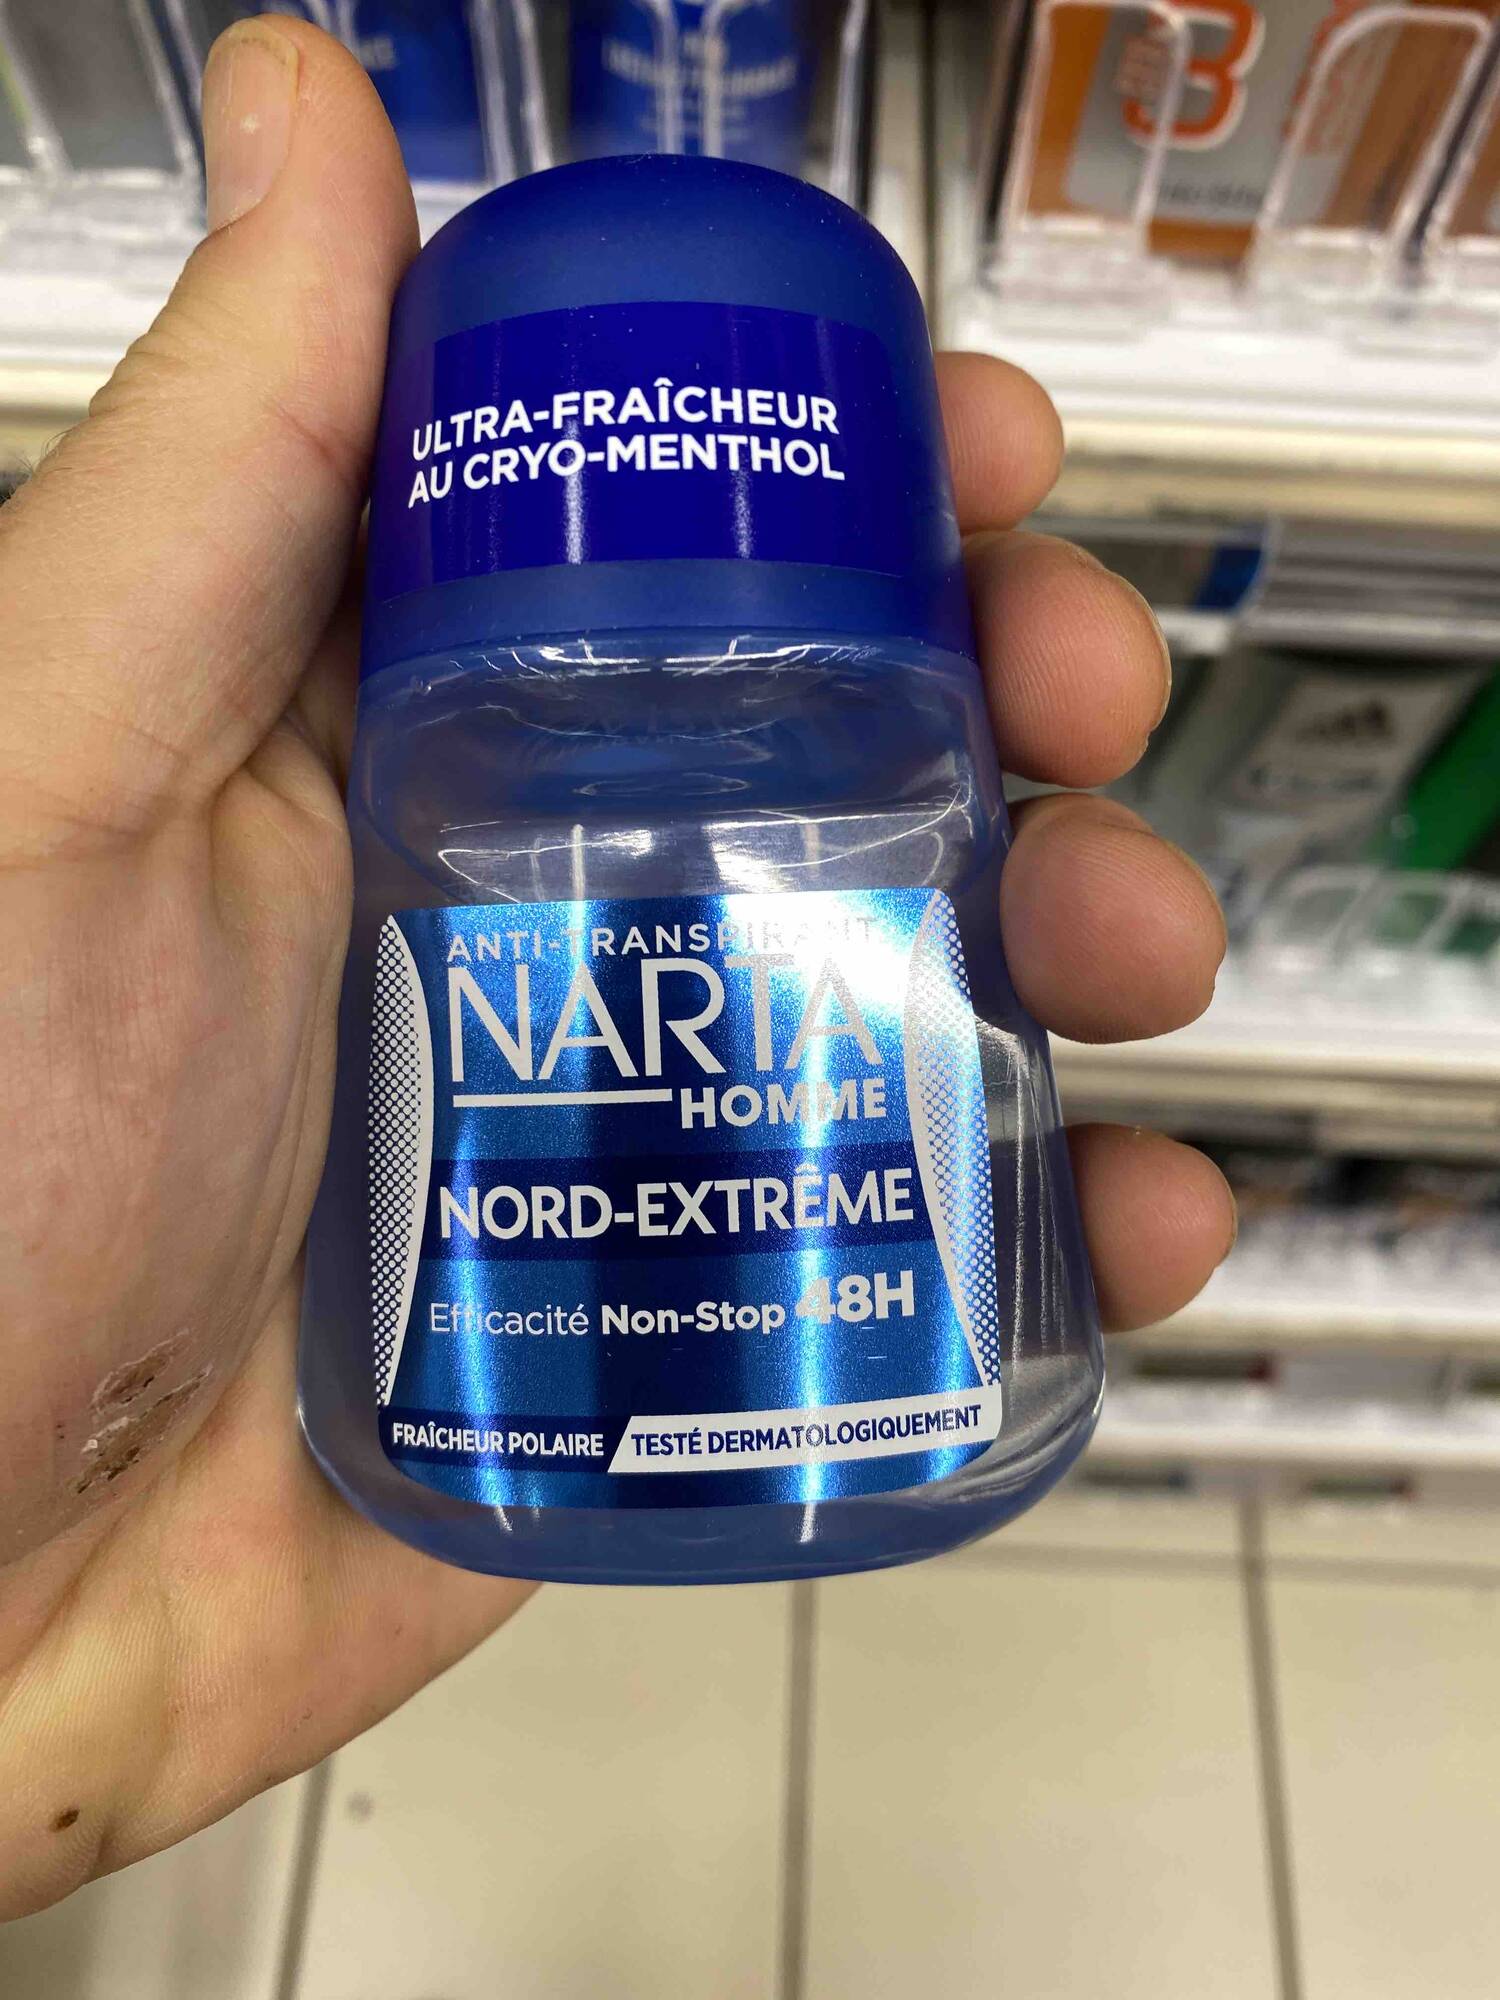 NARTA - Nord extrême homme - anti_transpirant